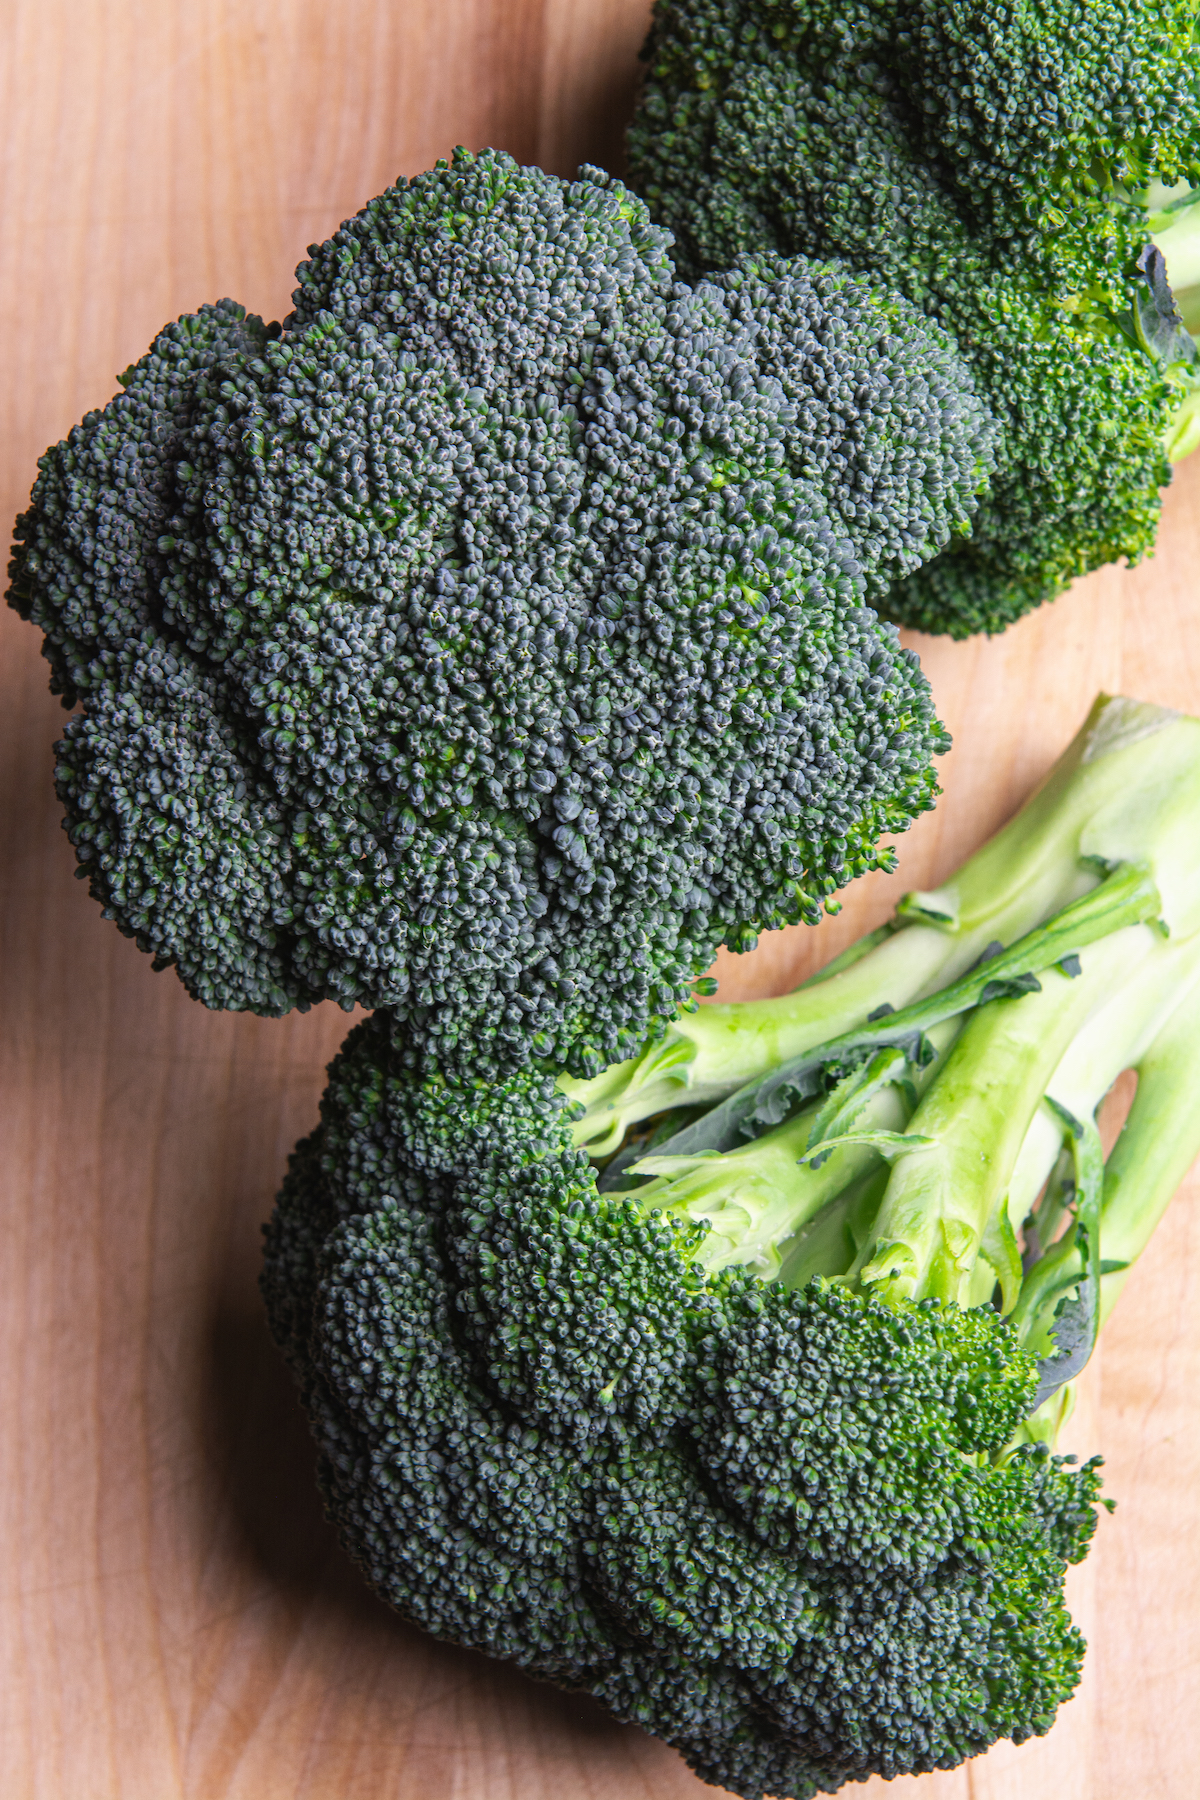 Three heads of raw broccoli